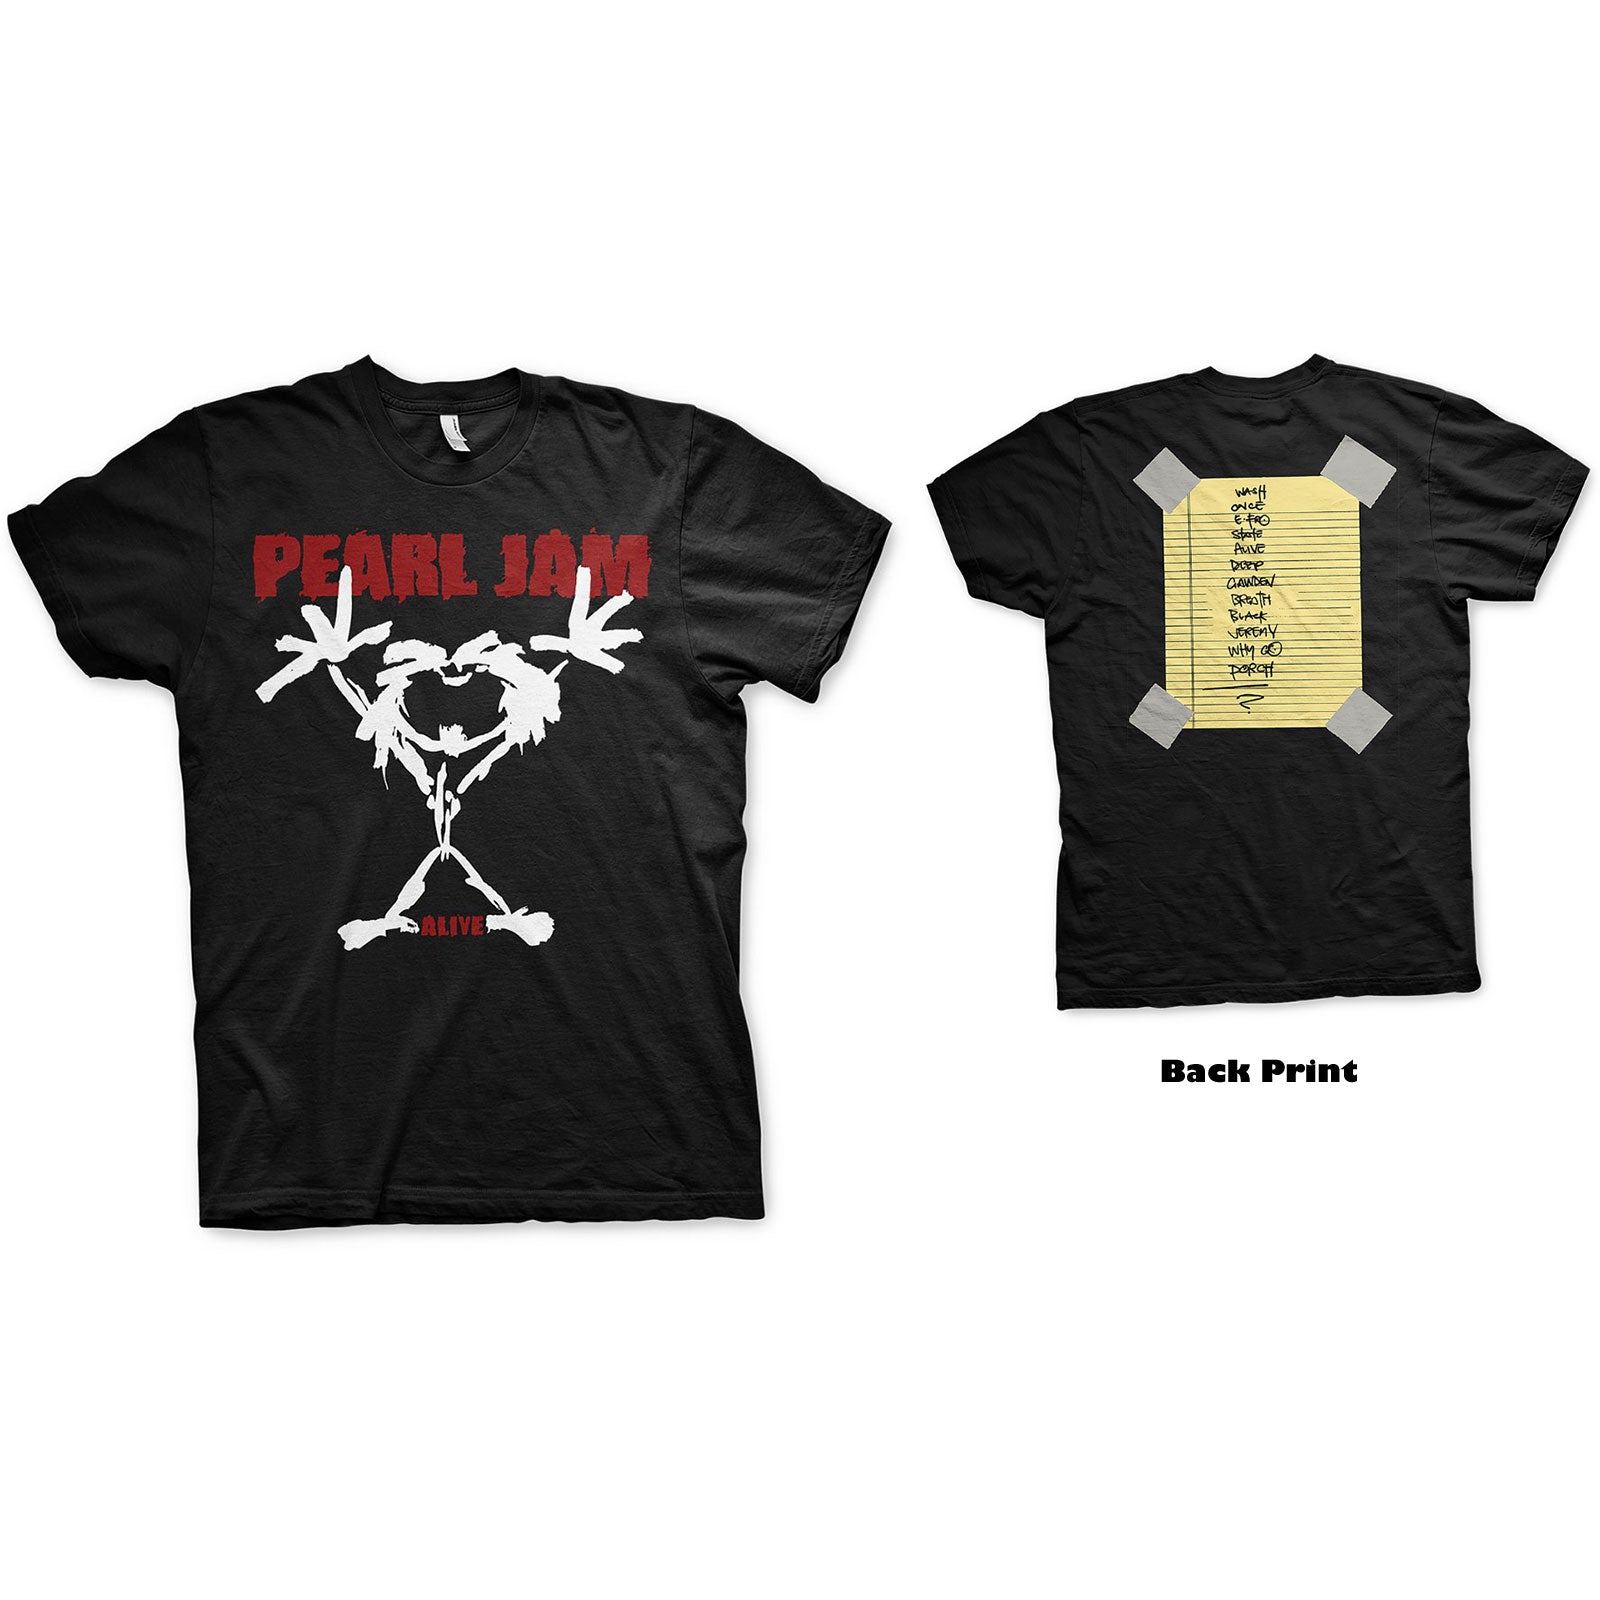 Pearl Jam "Stick Man" T shirt